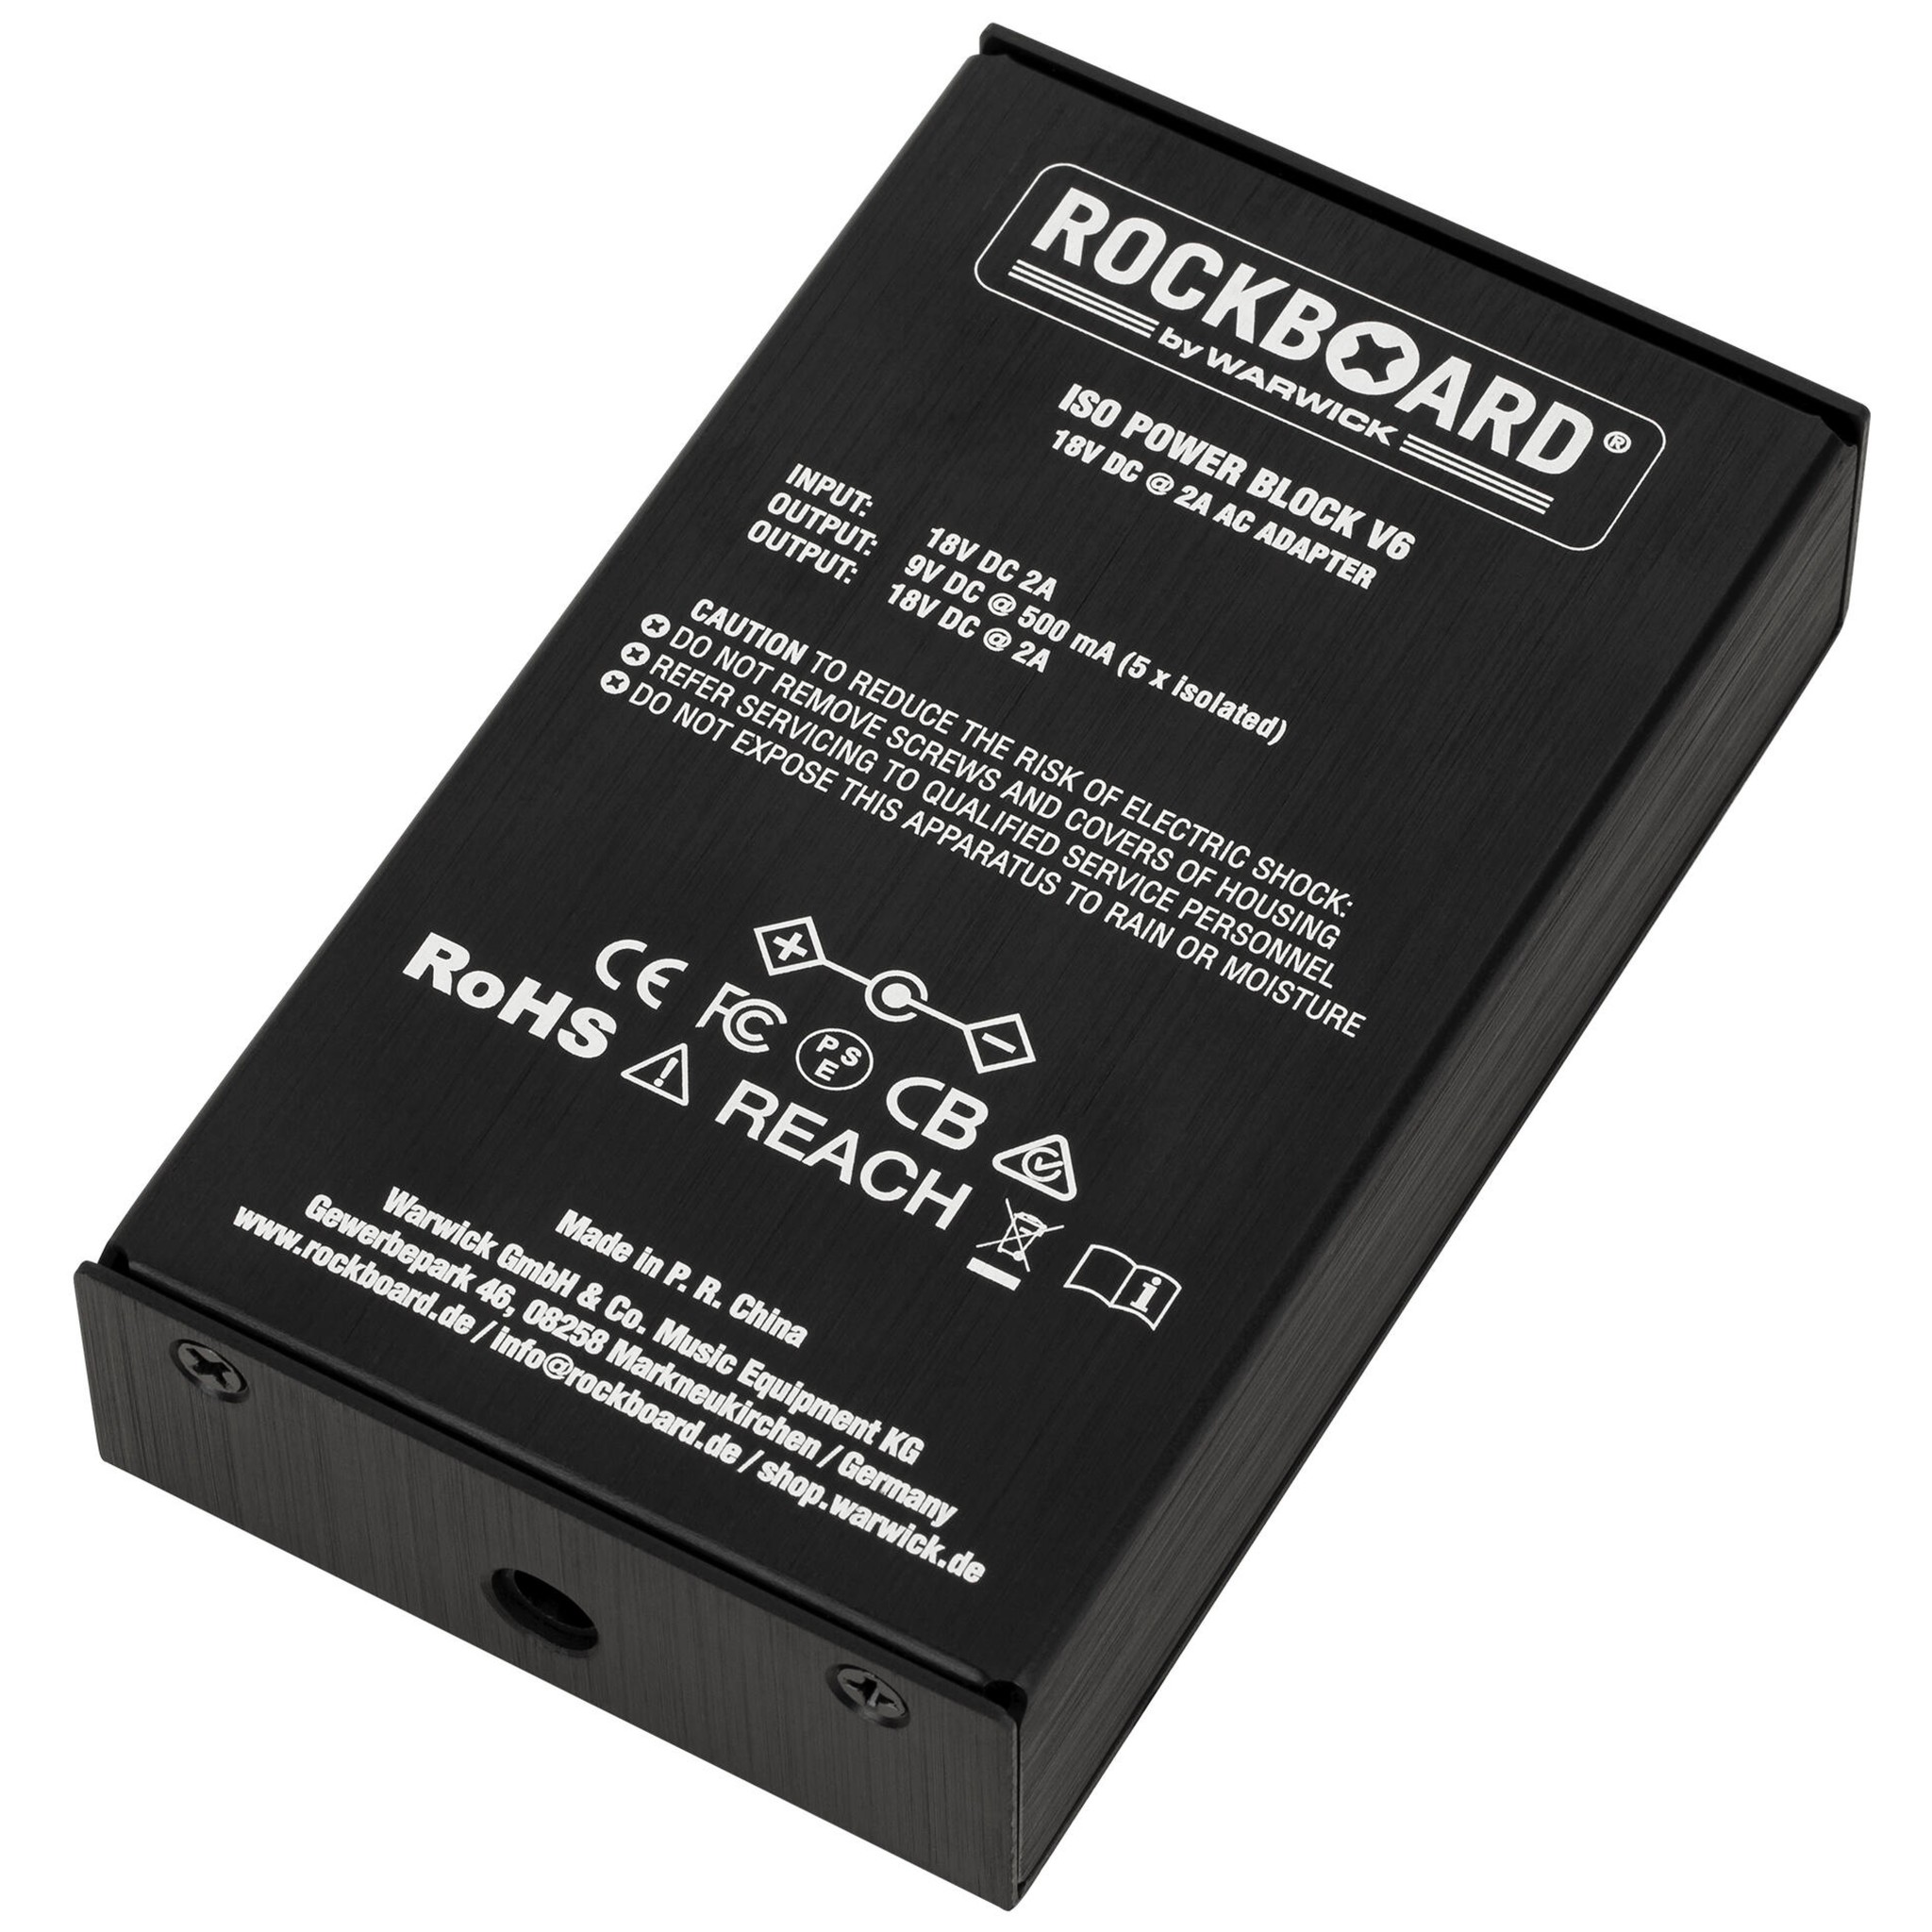 RockBoard ISO Power Block V6 - Isolated Multi Power Supply (5x 9v = 1x 18v, Linkable)